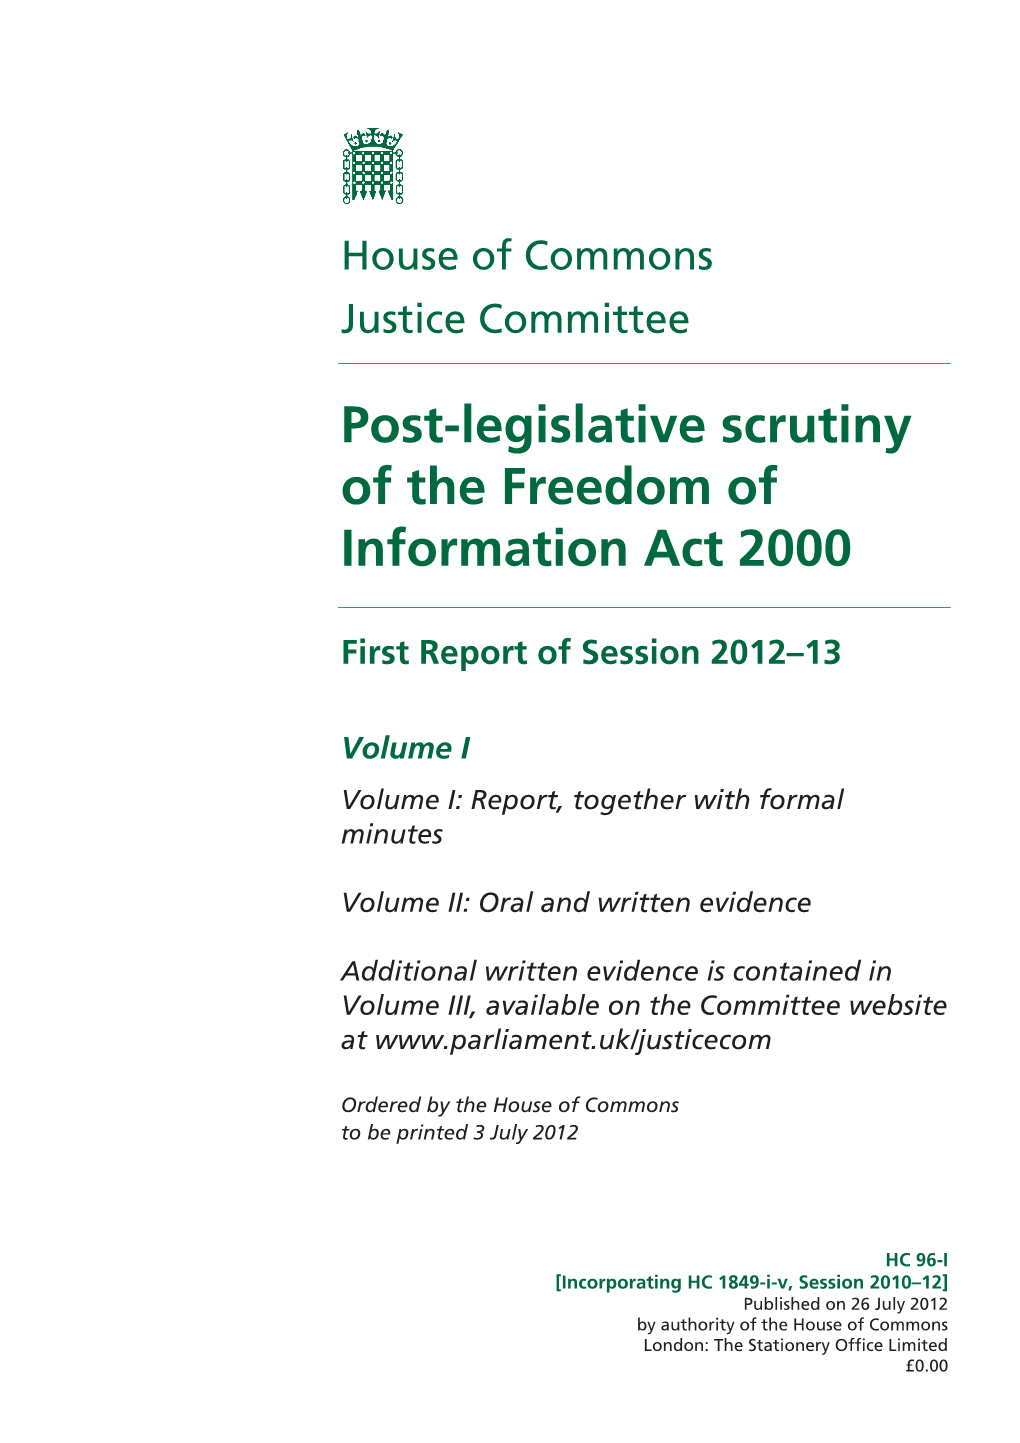 Post-Legislative Scrutiny of the Freedom of Information Act 2000